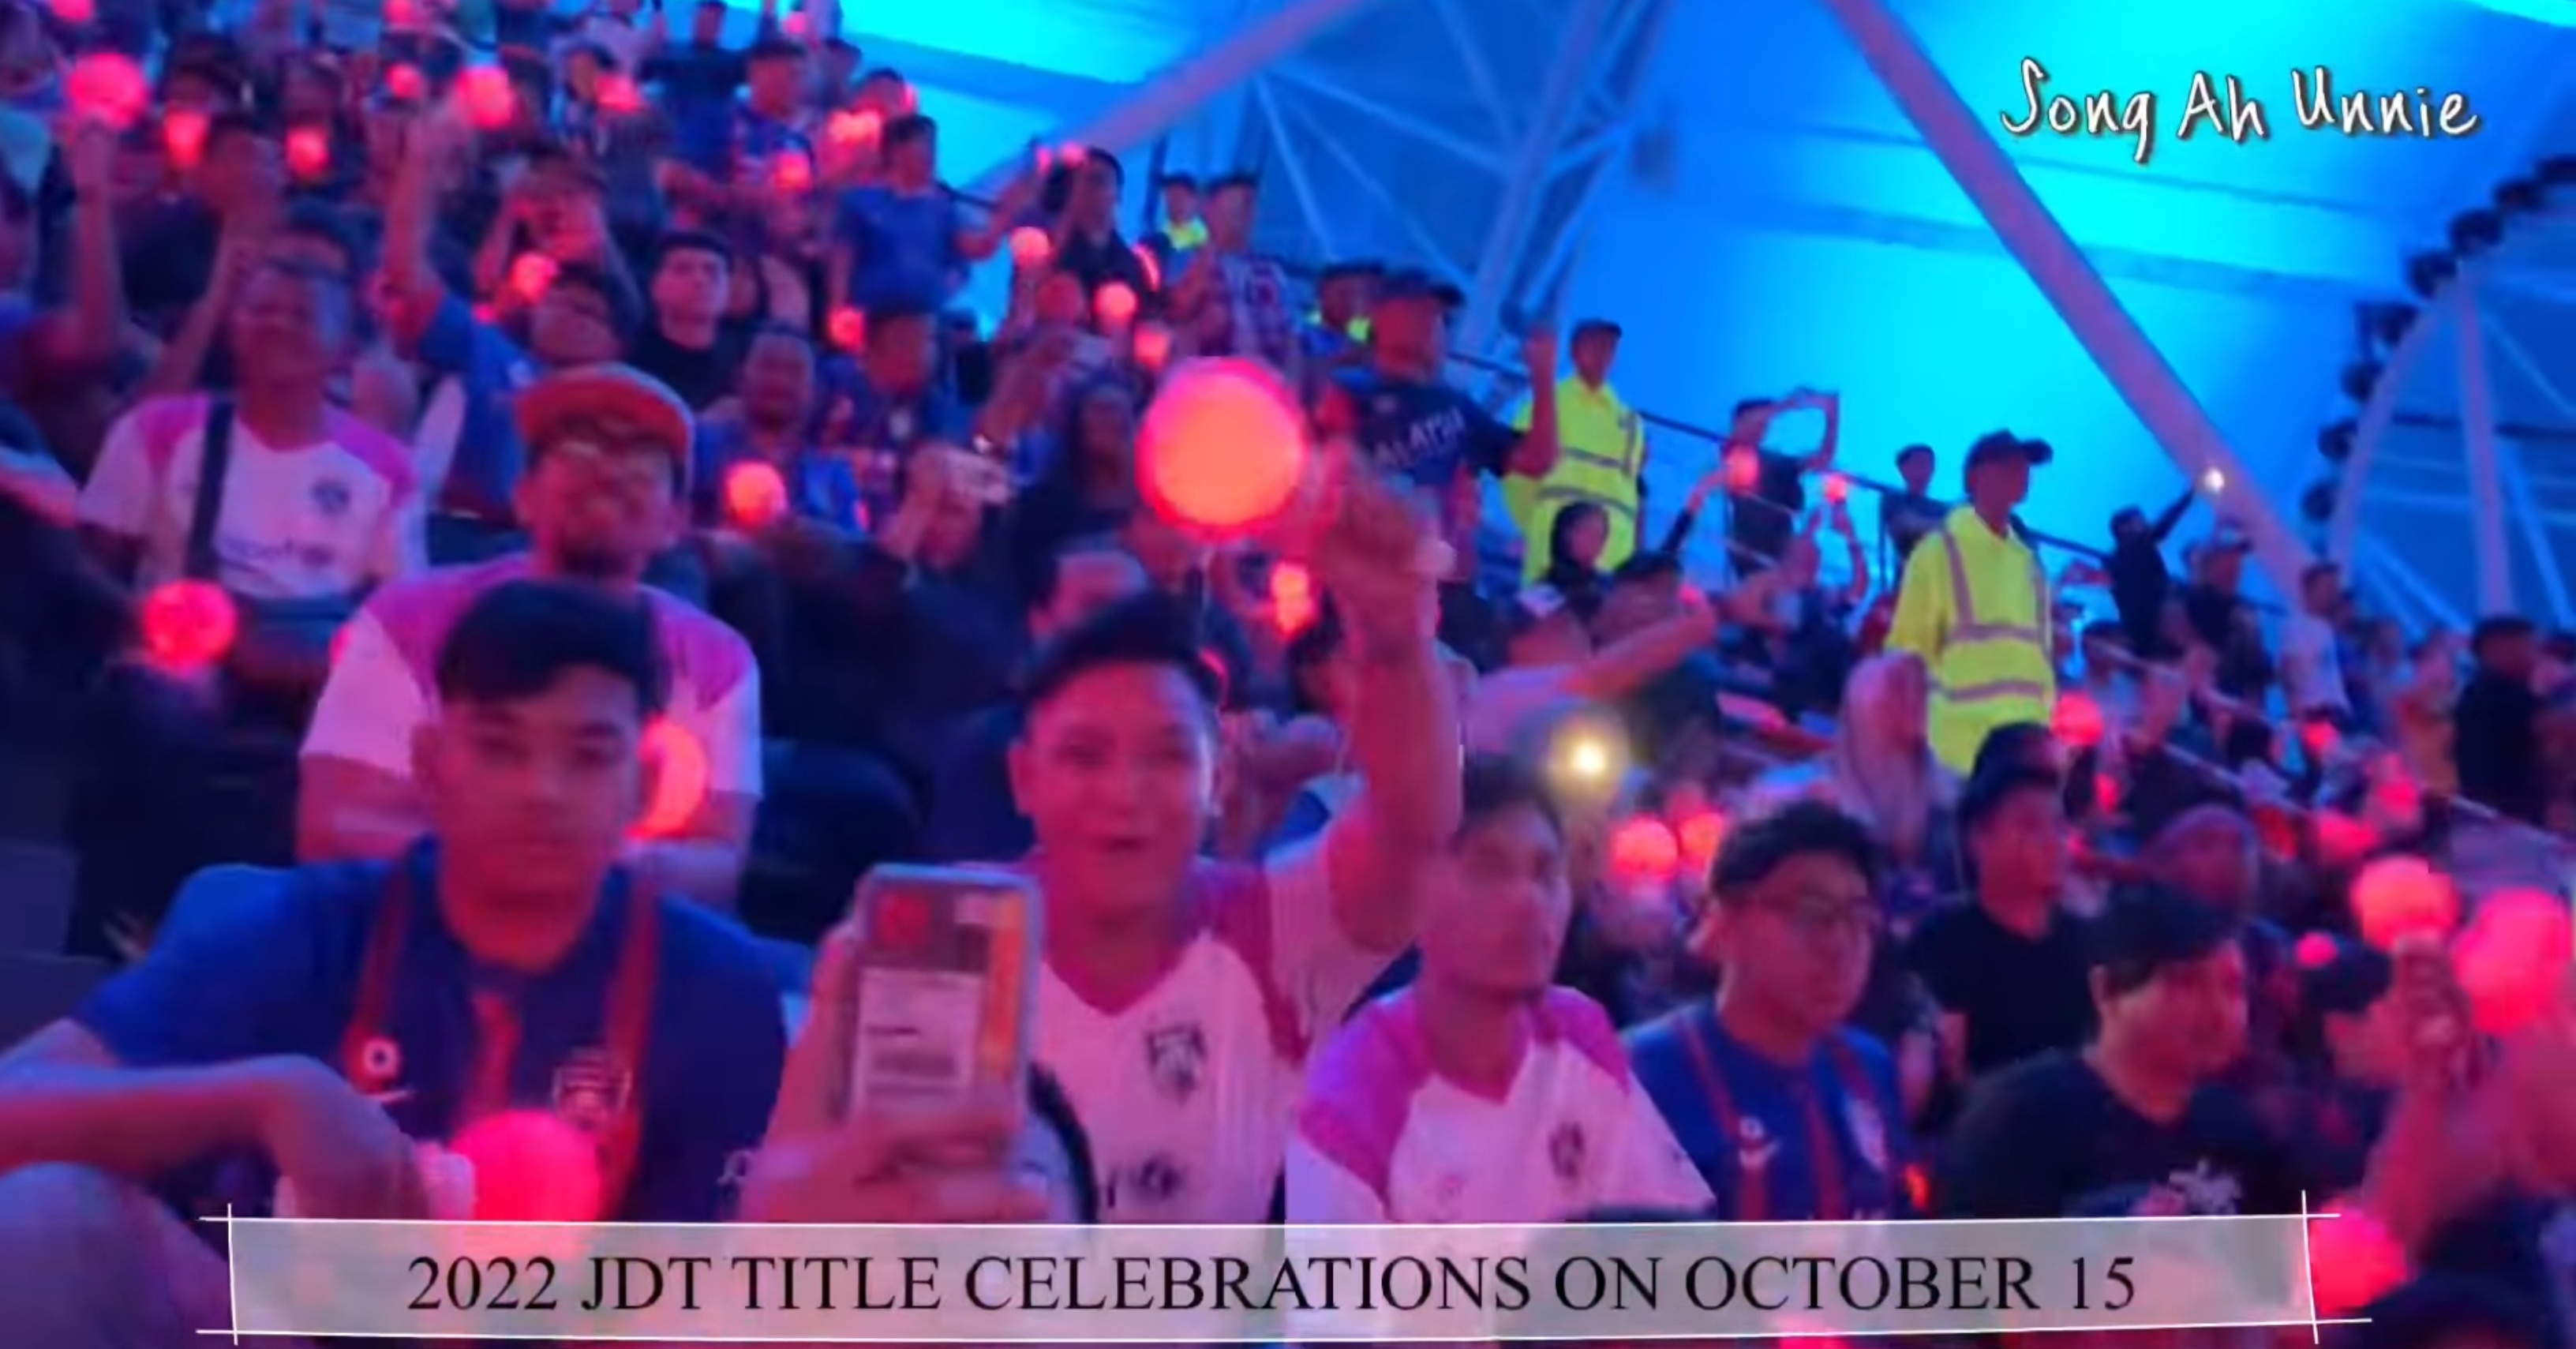 JDT FC (Johor Darul Ta'zim Football Club) won the Malaysian Super League trophy last October 15th. One of the Malaysian football teams with